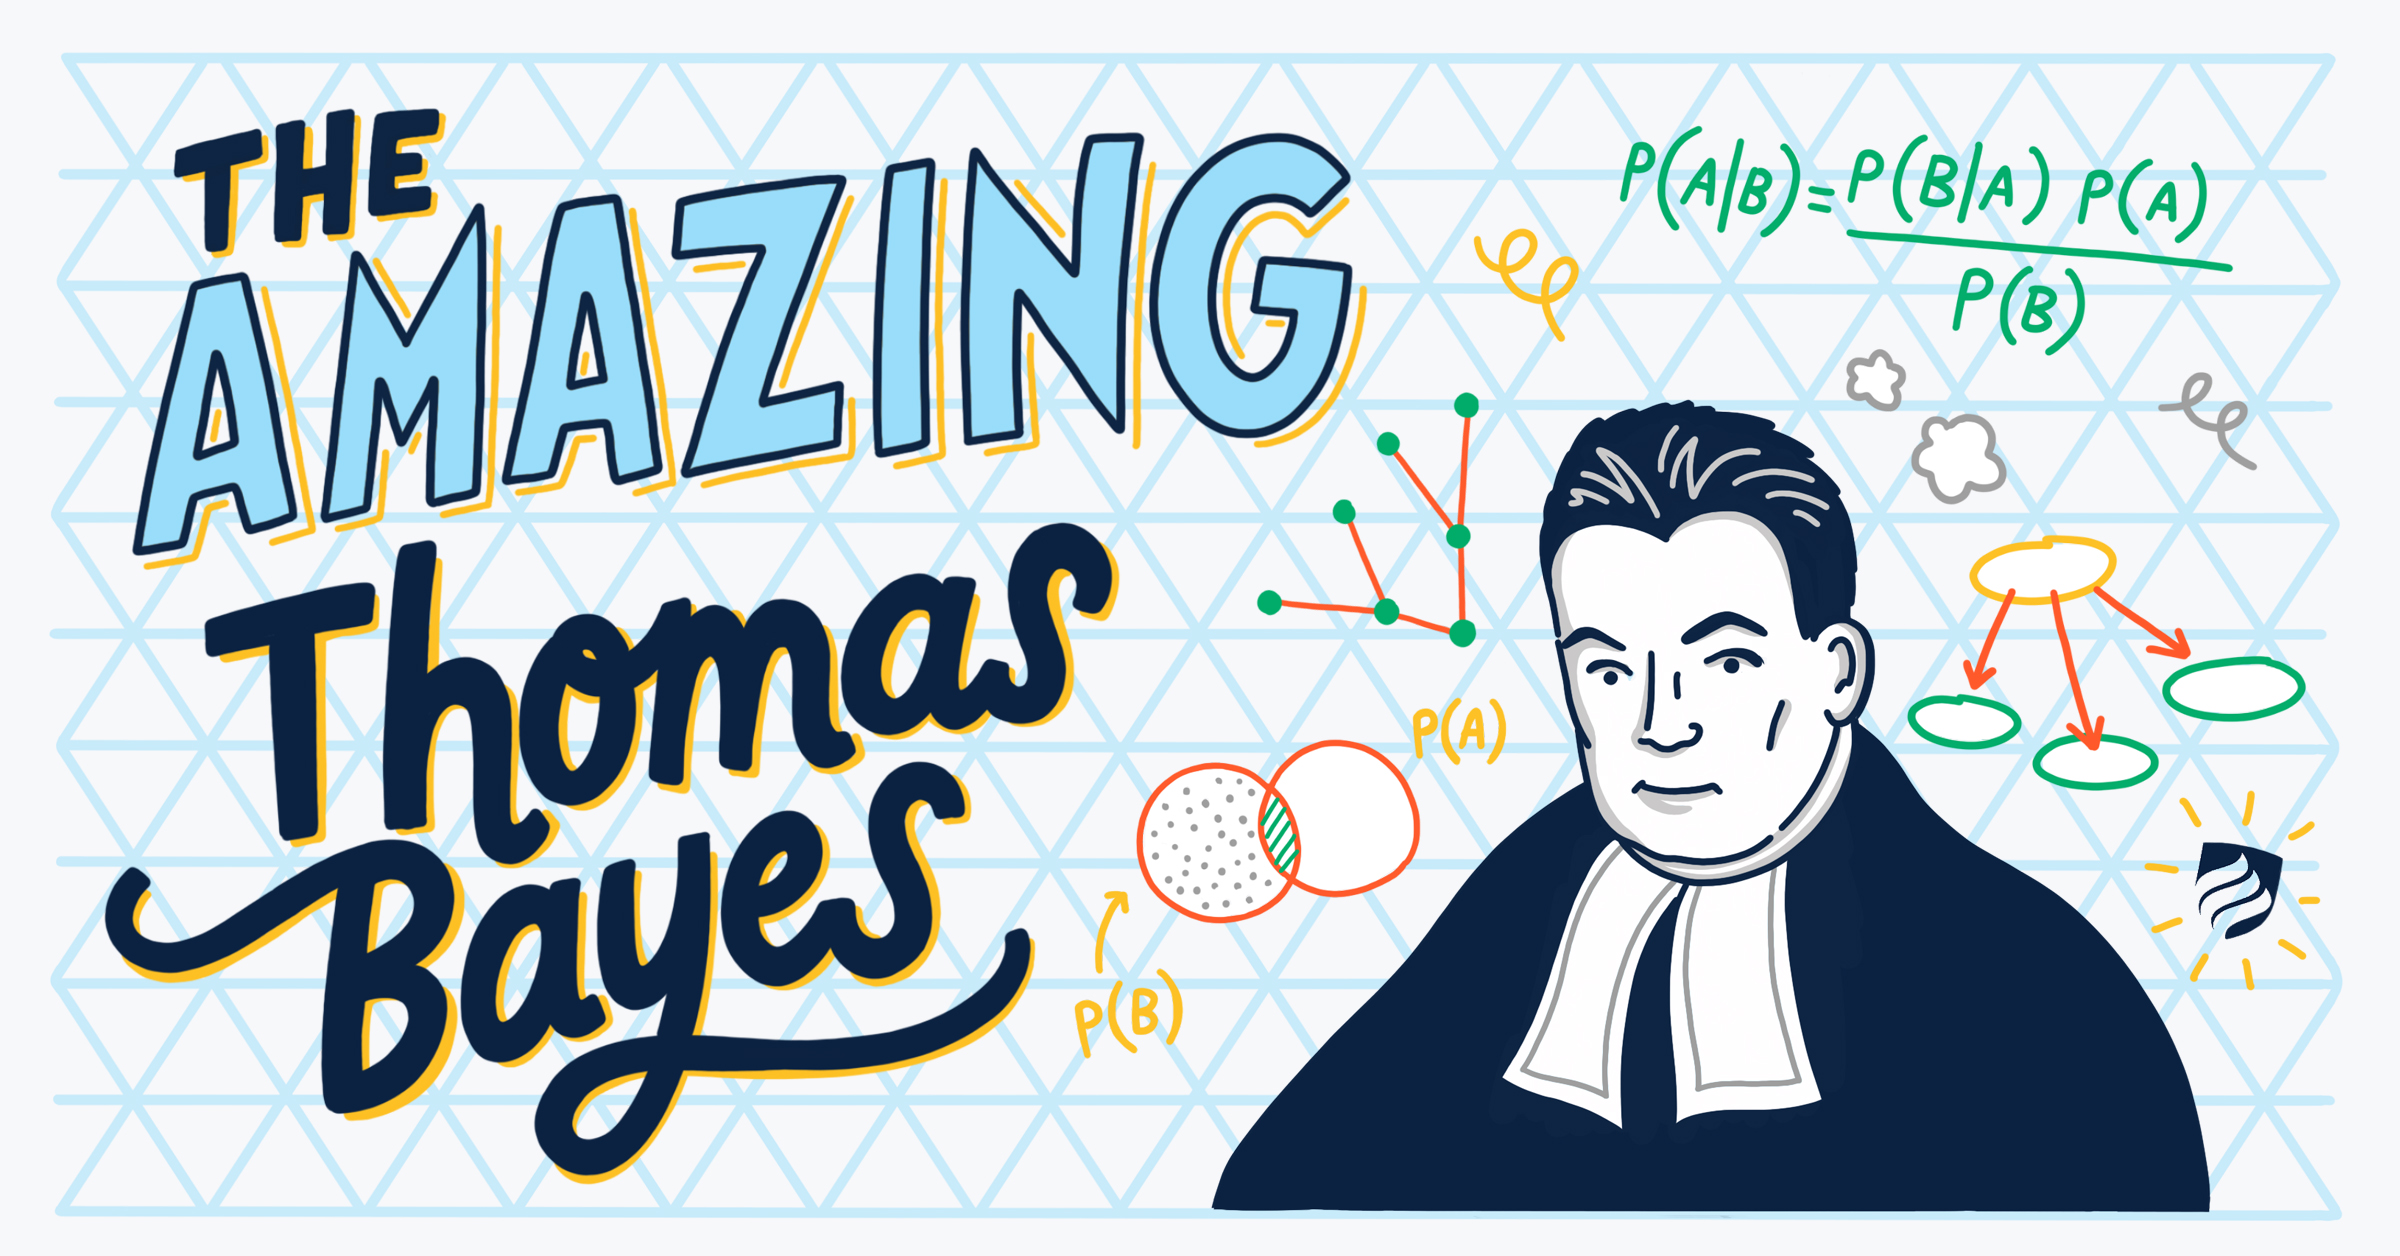 Cartoon of Thomas Bayes with Bayes' theorem in background. Source: James Kulich at <https://www.elmhurst.edu/blog/thomas-bayes/>